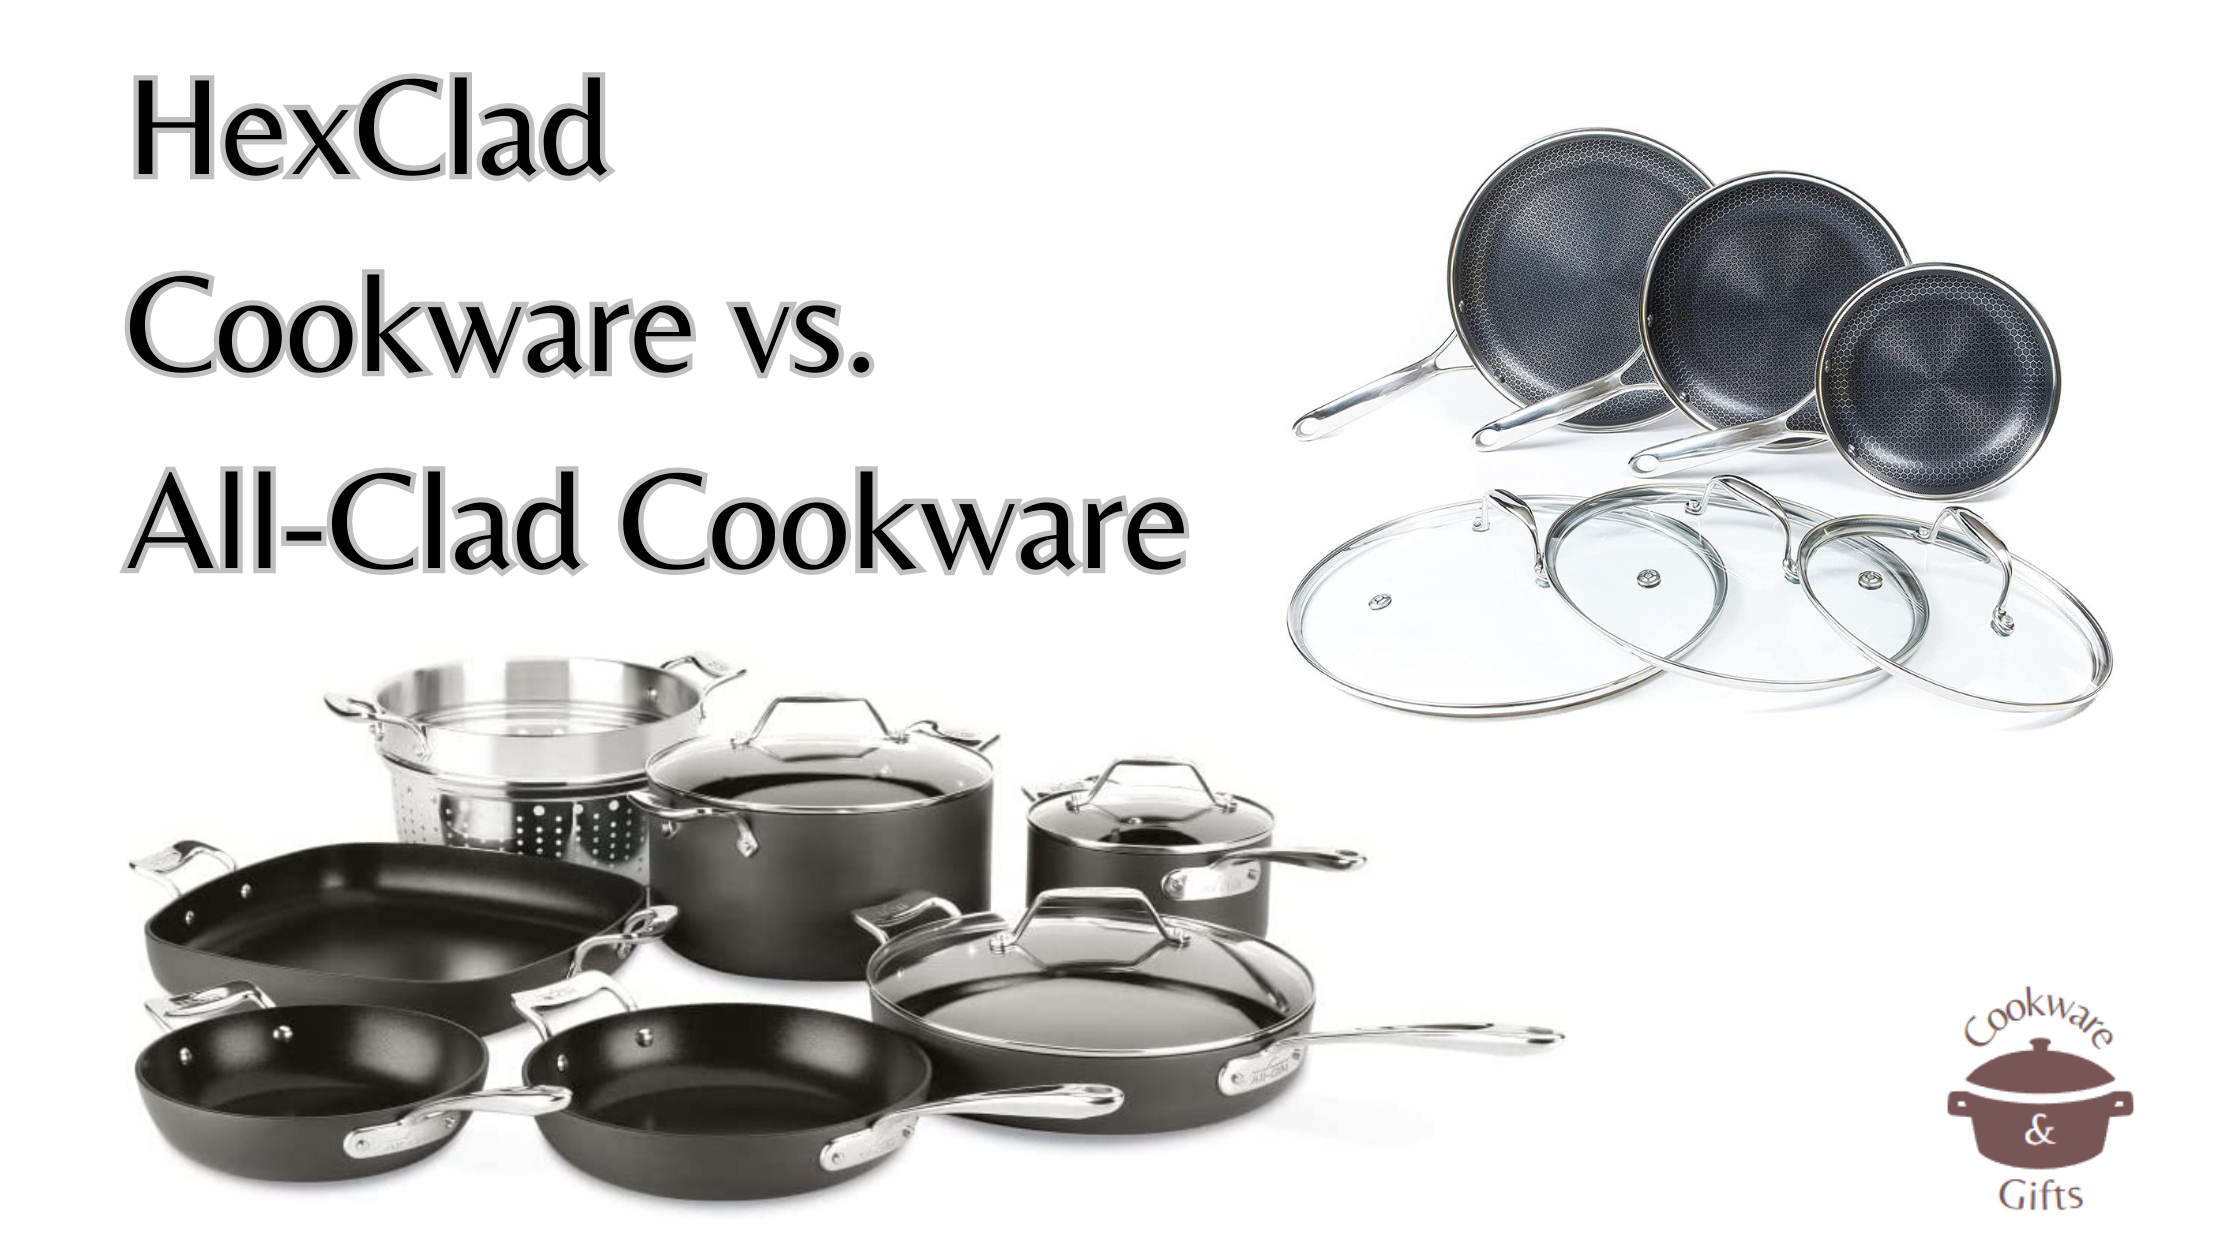 HewClad Cookware vs. All-Clad Cookware